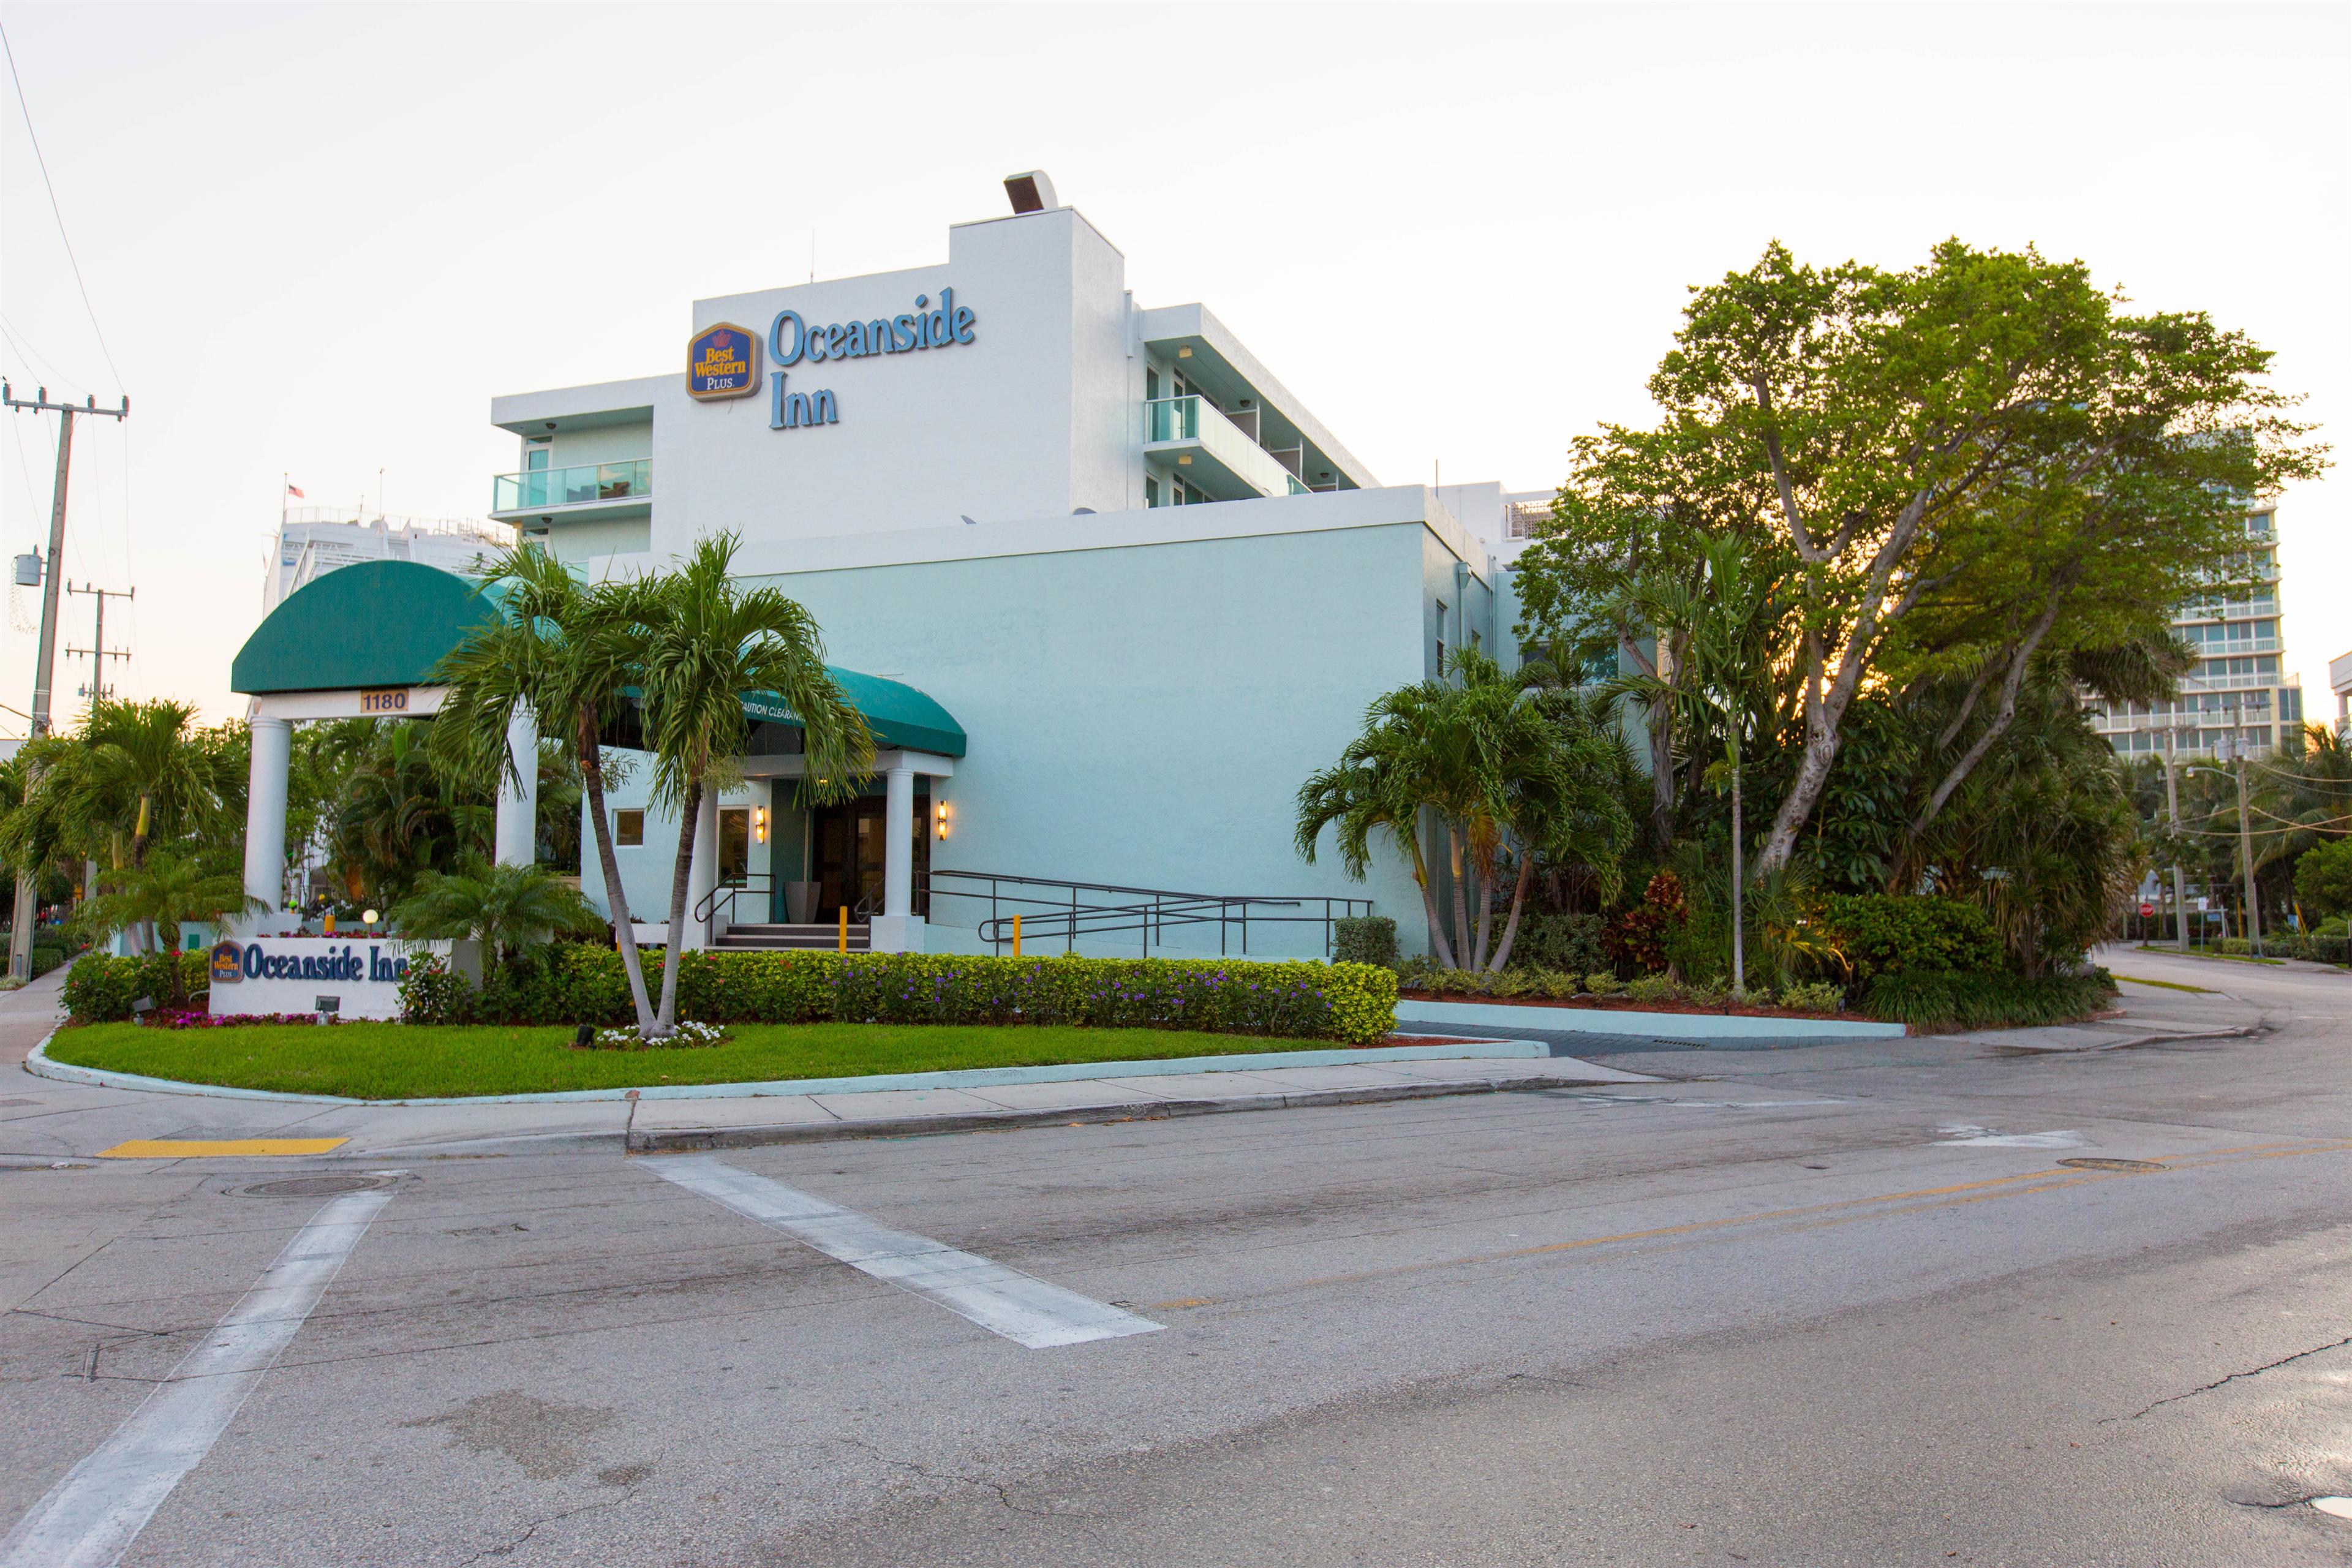 Best Western Plus Oceanside Inn in Fort Lauderdale, FL - (954) 525-8...